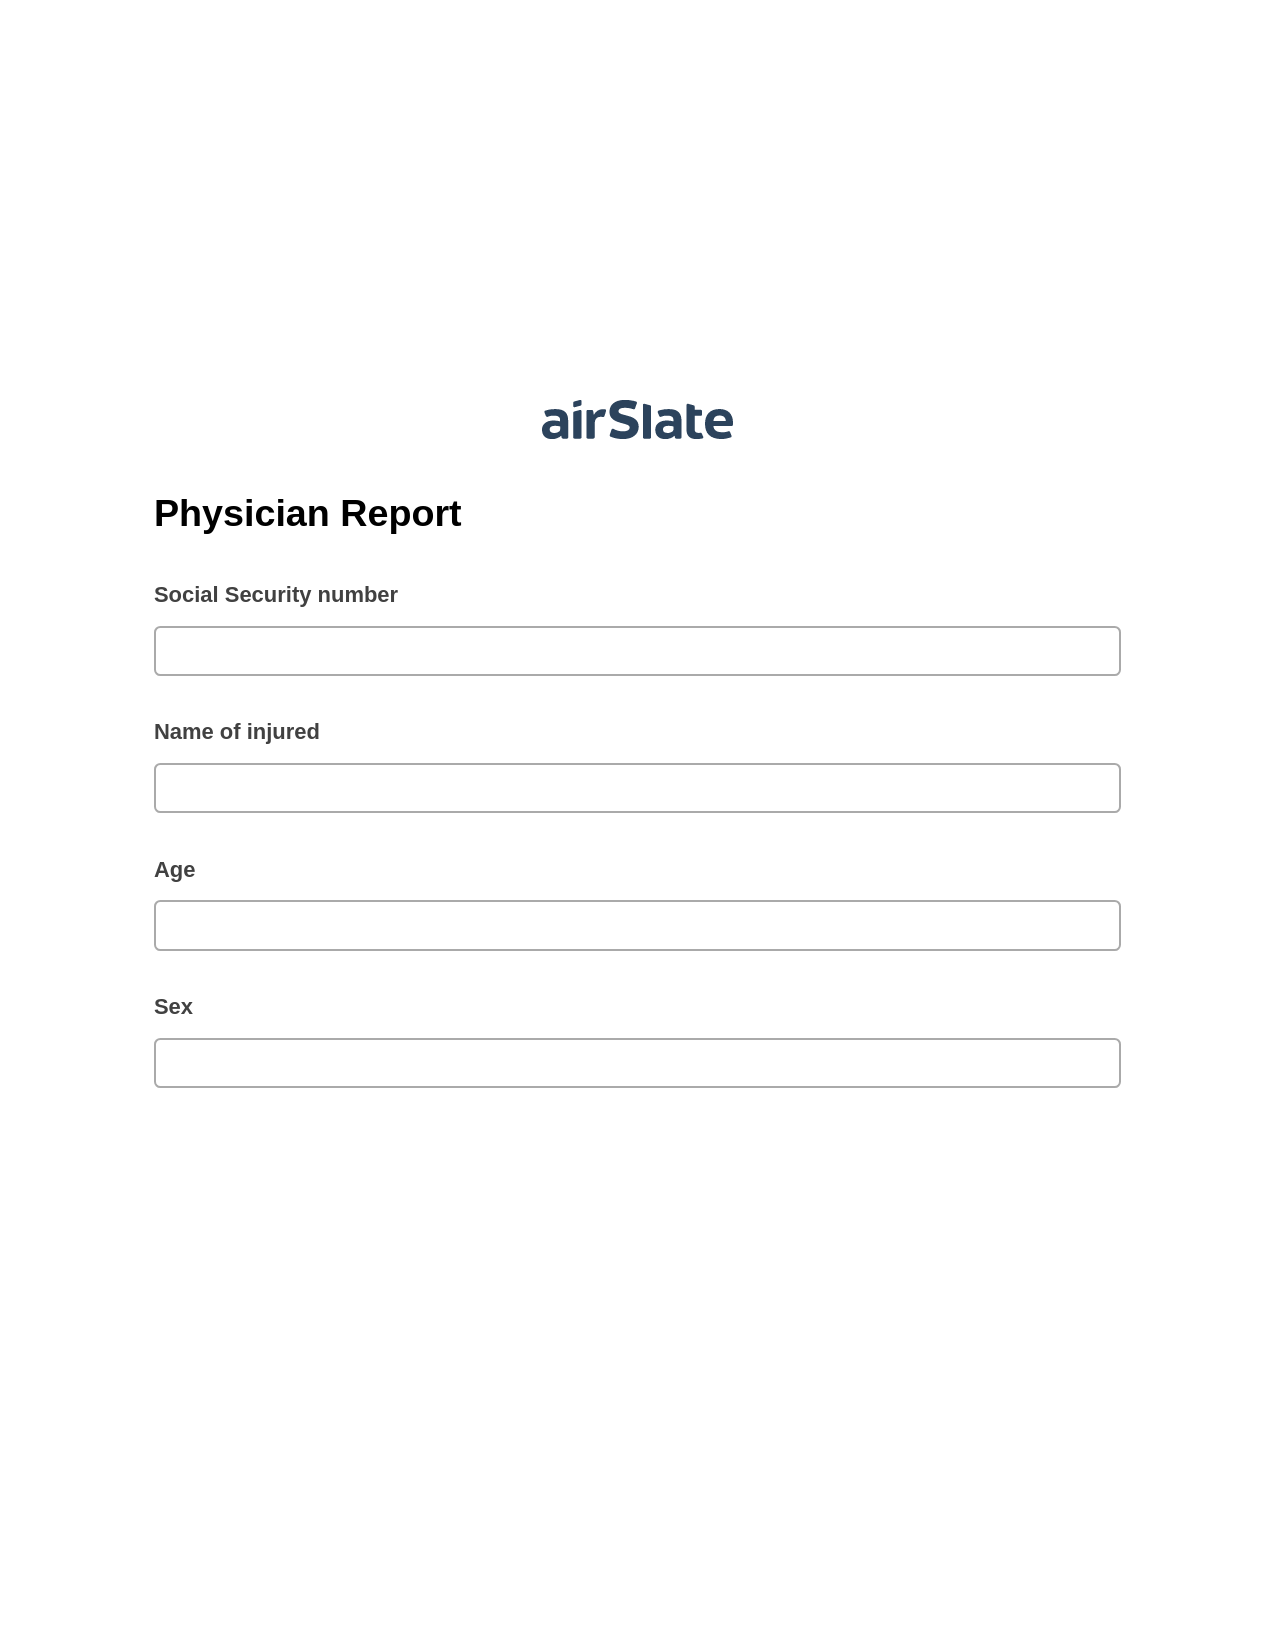 Physician Report Pre-fill Dropdowns from MySQL Bot, Update NetSuite Record Bot, Webhook Postfinish Bot